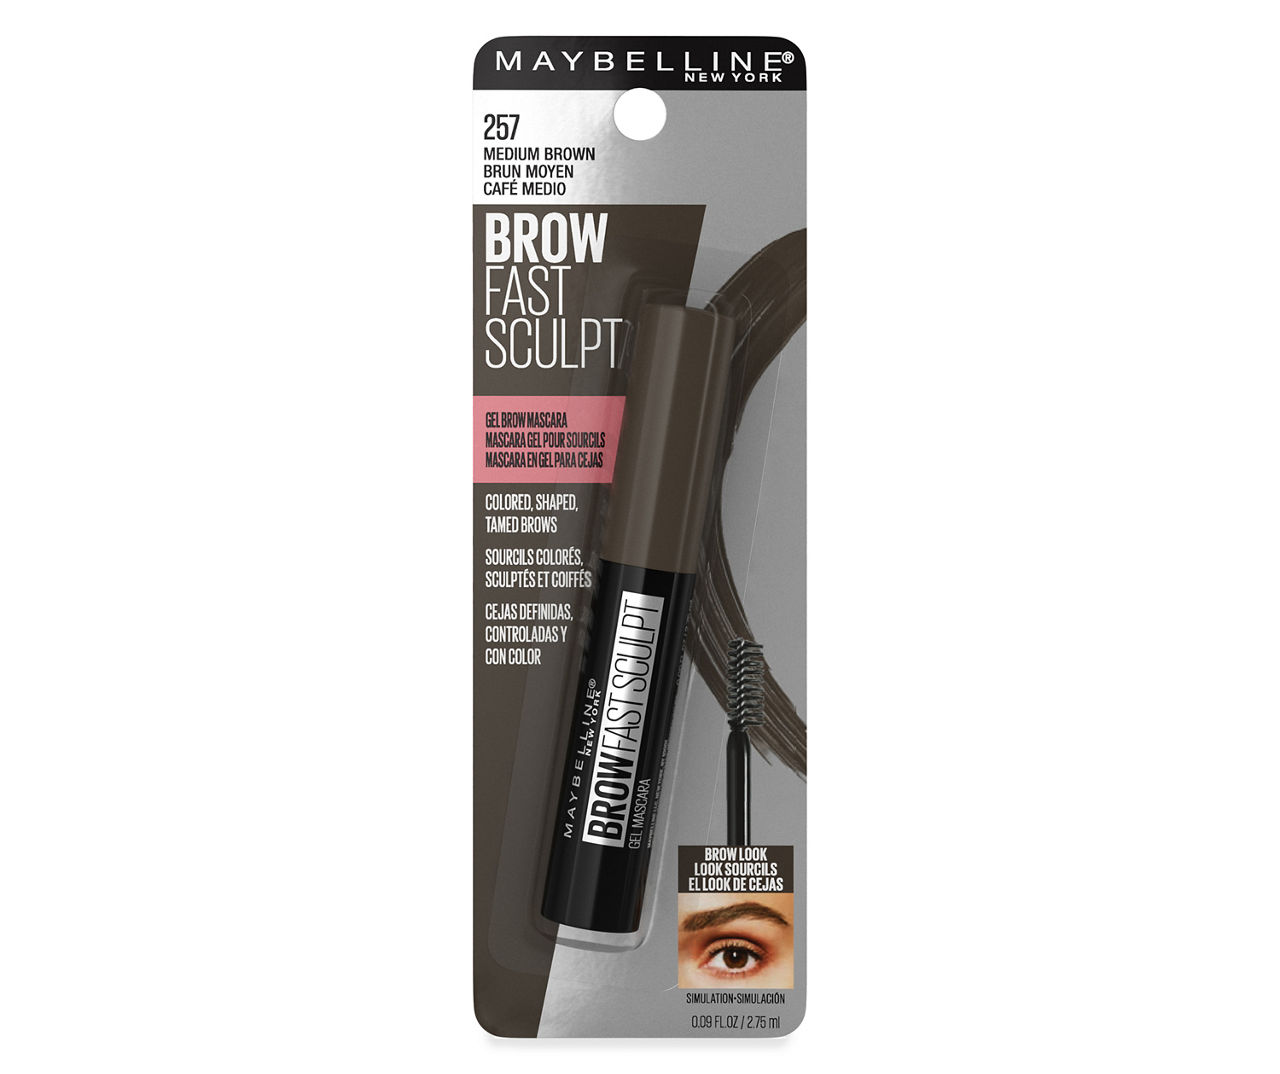 Maybelline Brow Fast Sculpt, Shapes Eyebrows, Eyebrow Mascara Makeup, Medium Brown, 0.09 fl. oz.